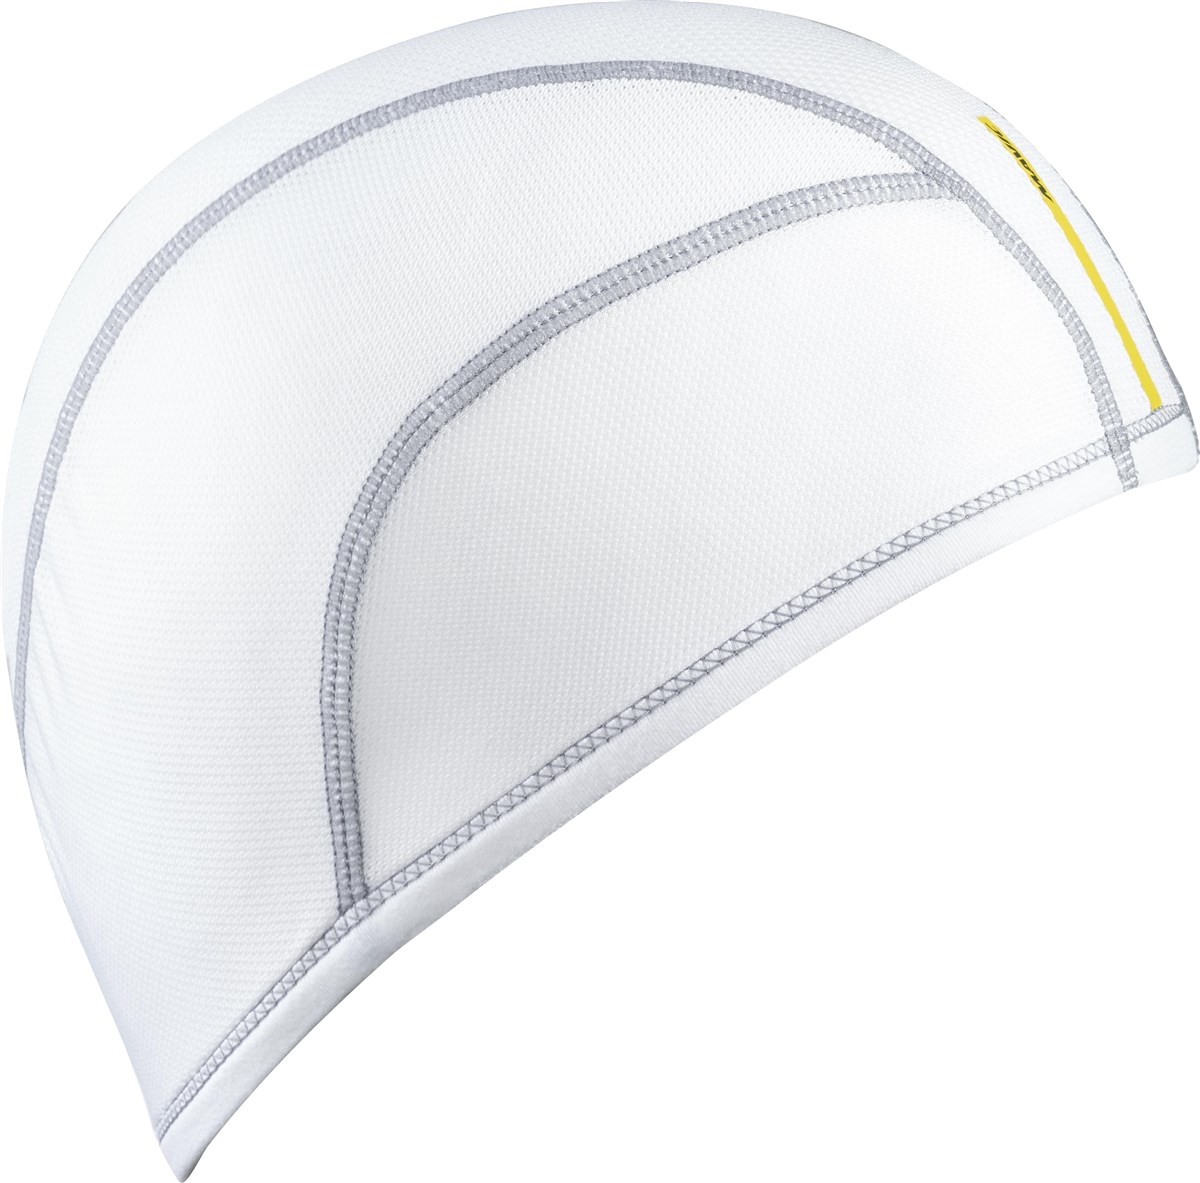 Mavic Underhelmet Cap SS17 product image